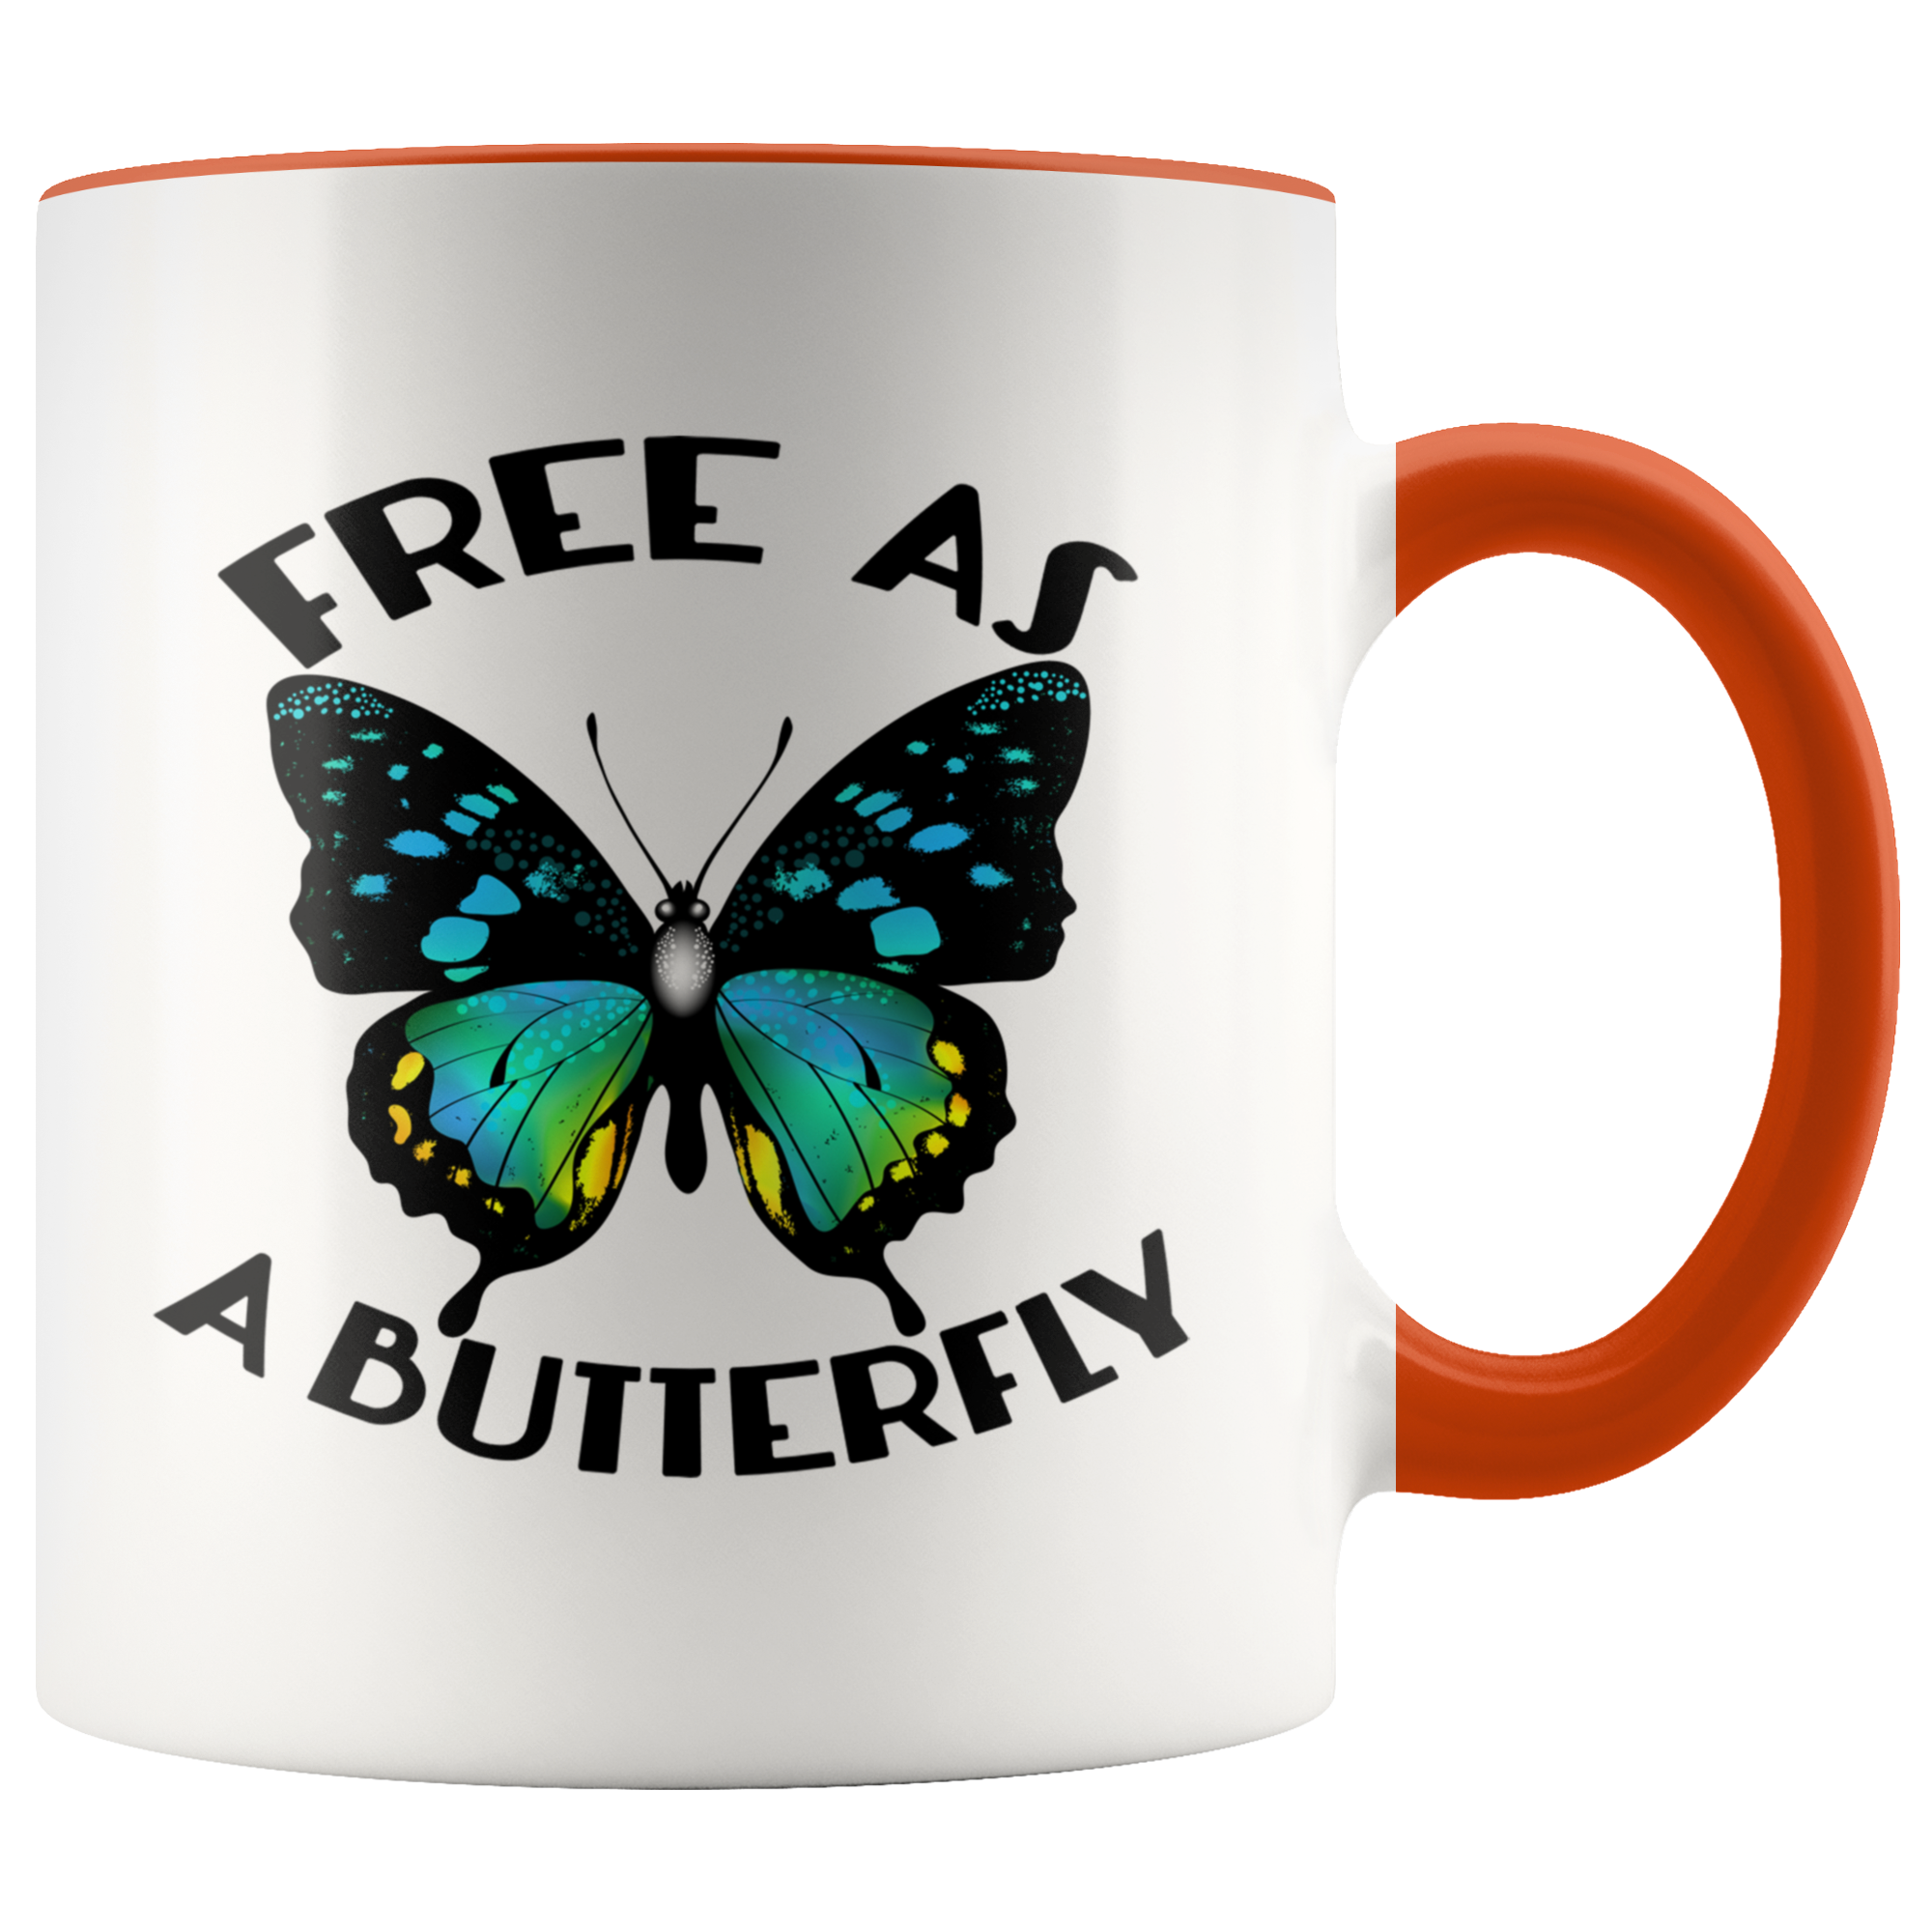 Free as a Butterfly Mug